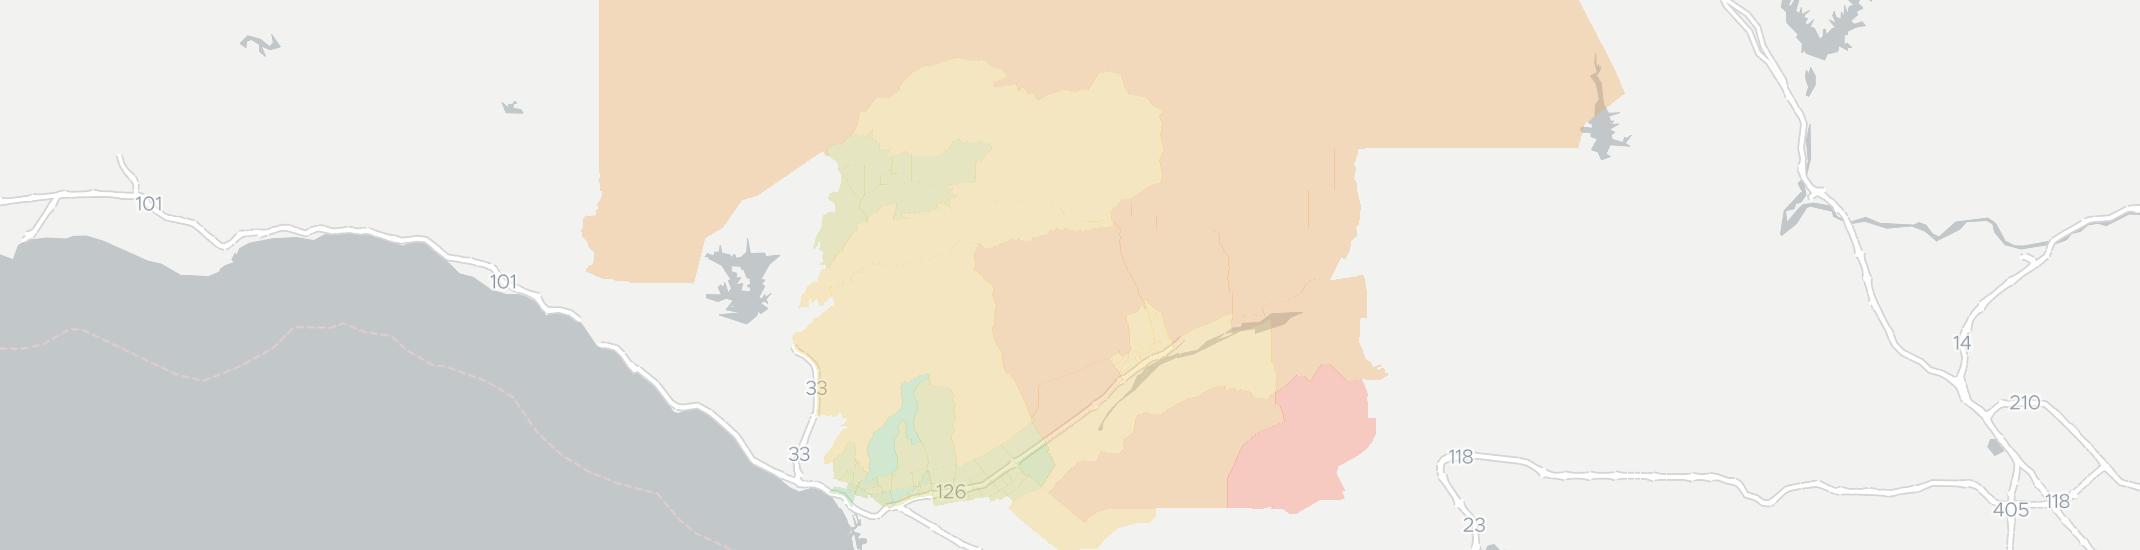 Santa Paula Internet Competition Map. Click for interactive map.